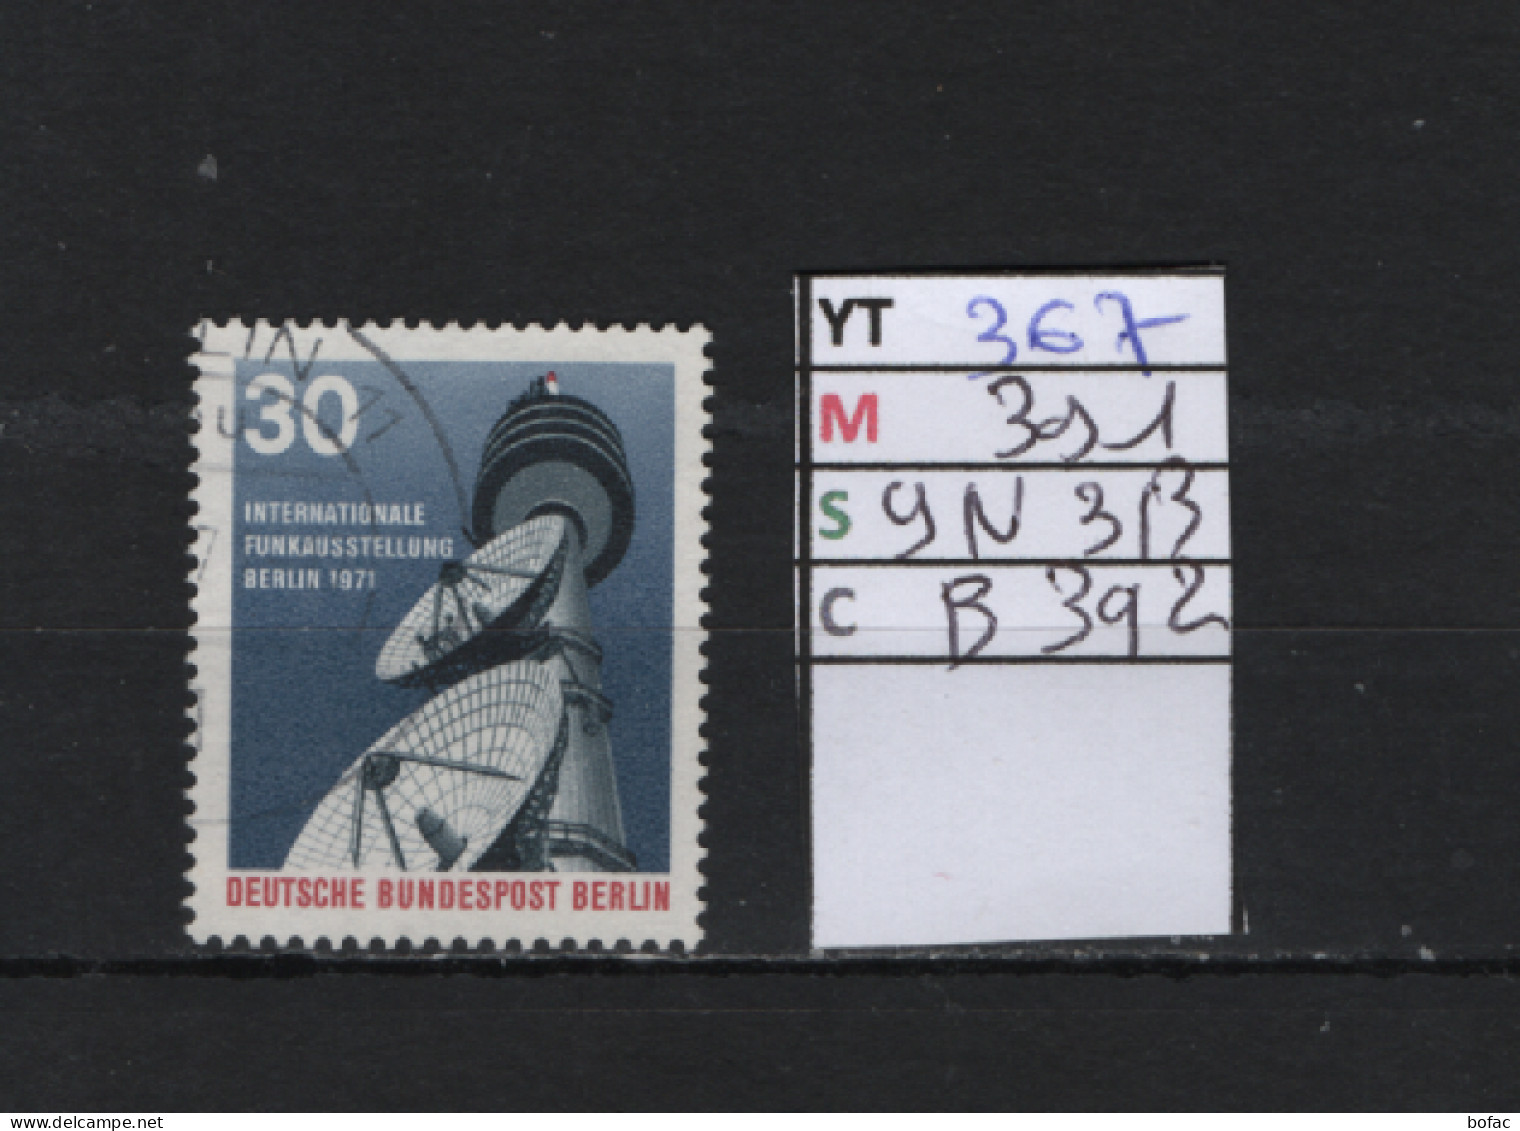 P. FIXE Obl 367 MIC 391 MIC 9N313 SCO B392 GIB Exposition International De La Radio 1971 *Berlin* 75/03 - Used Stamps